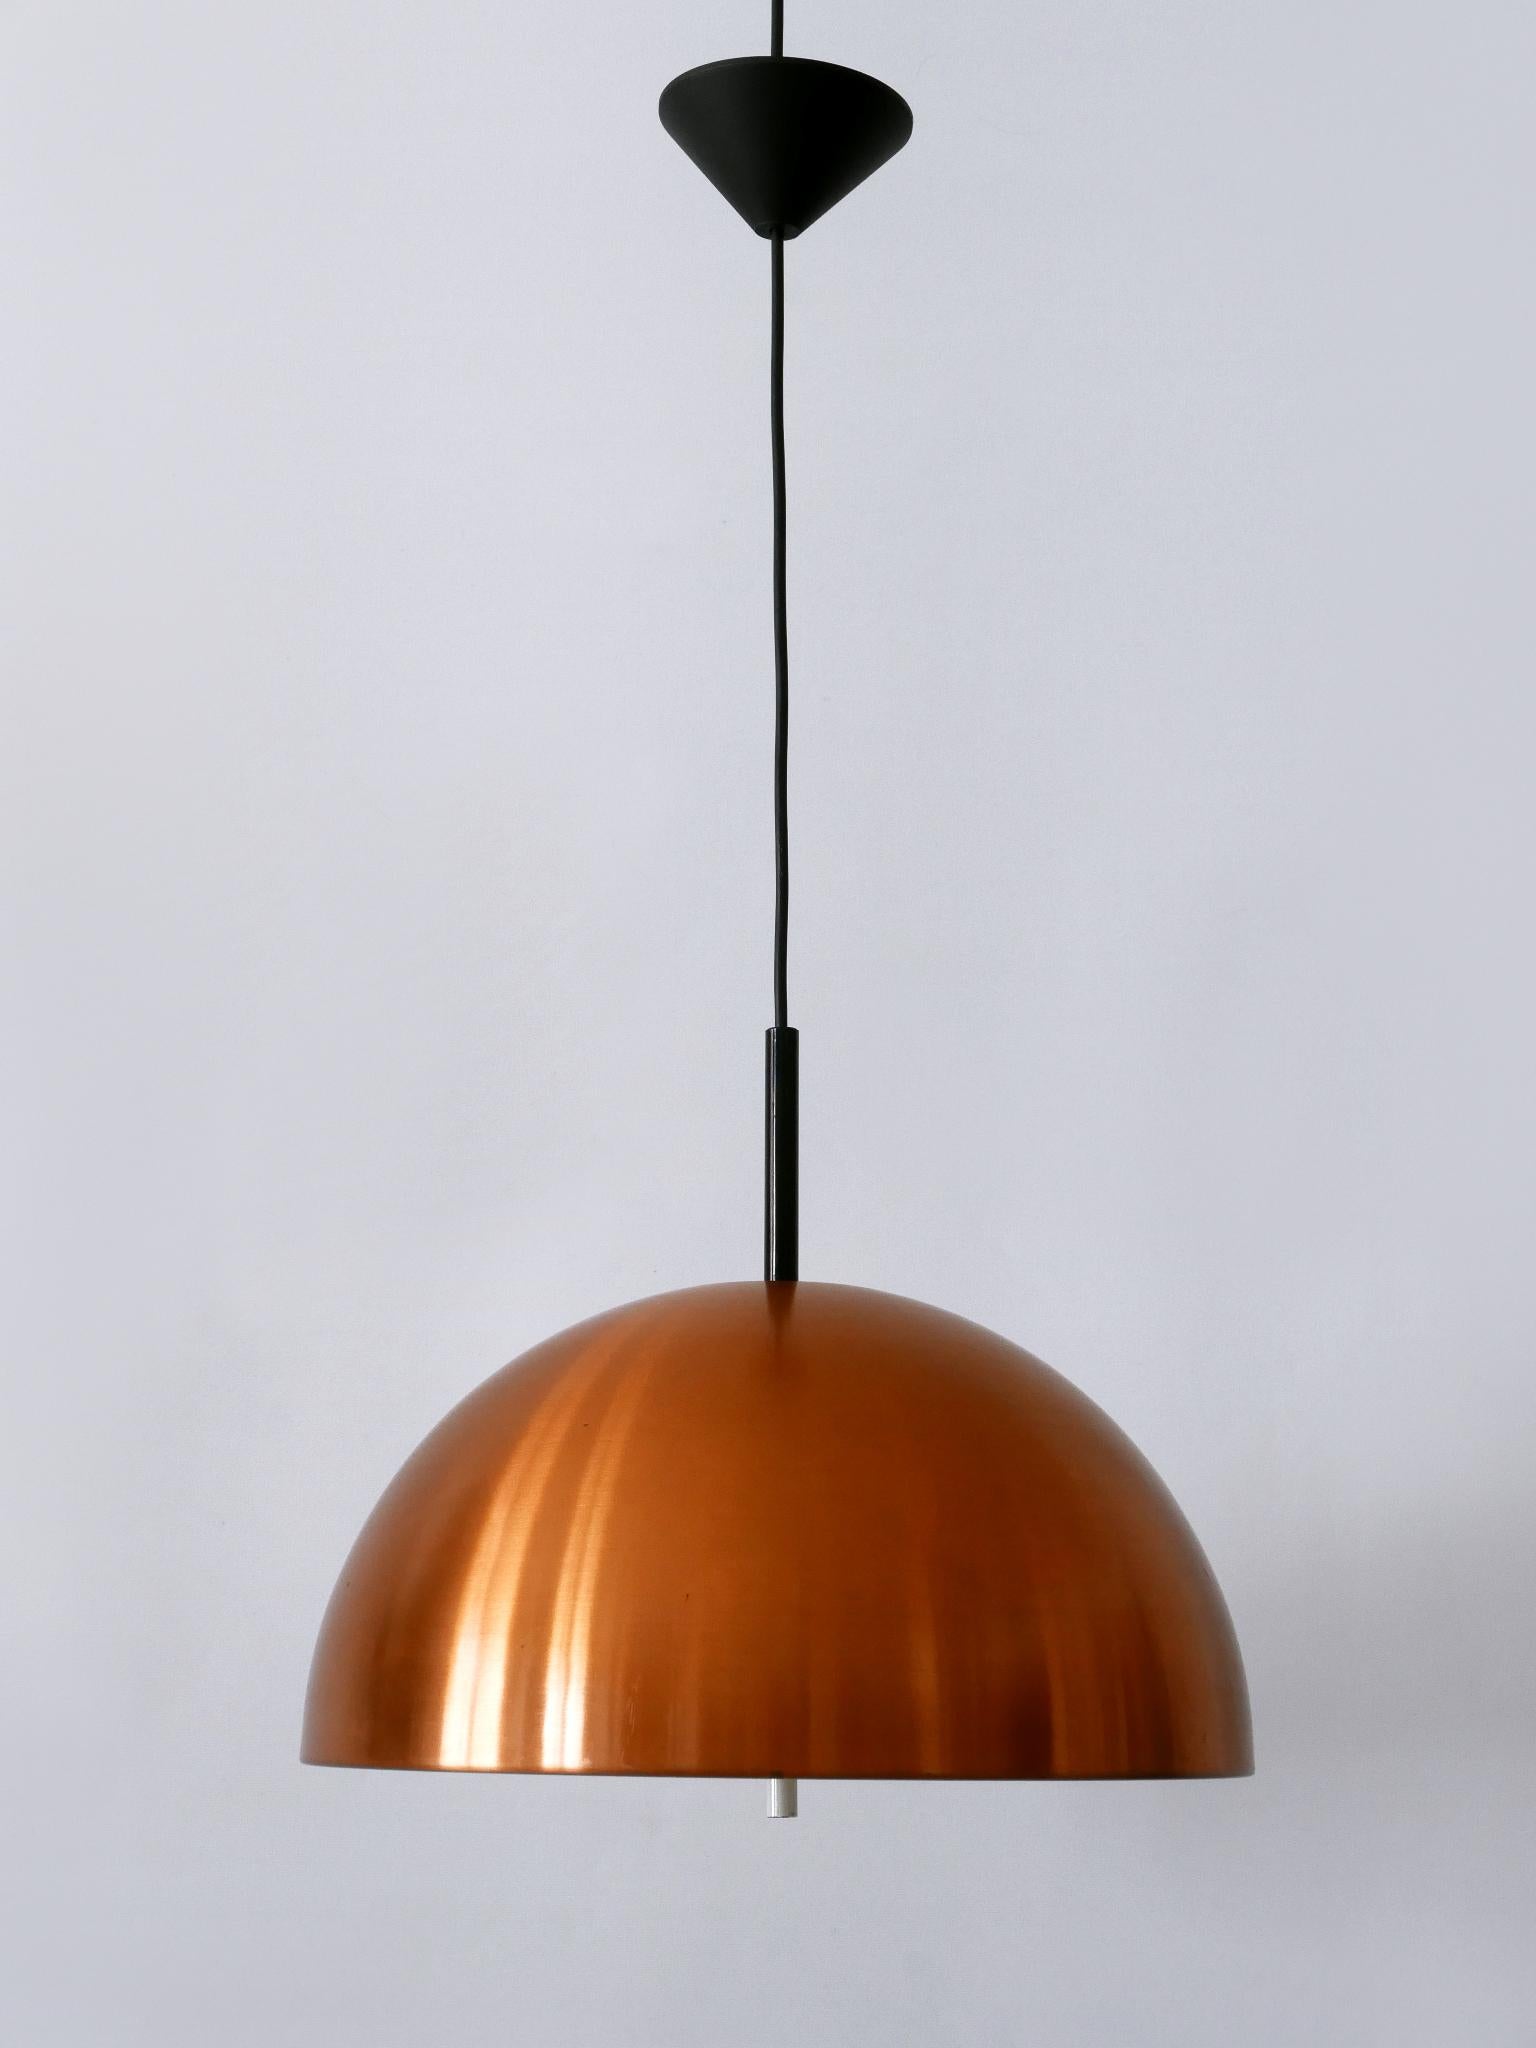 Elegant Mid-Century Modern Copper Pendant Lamp by Staff & Schwarz Germany 1960s For Sale 6